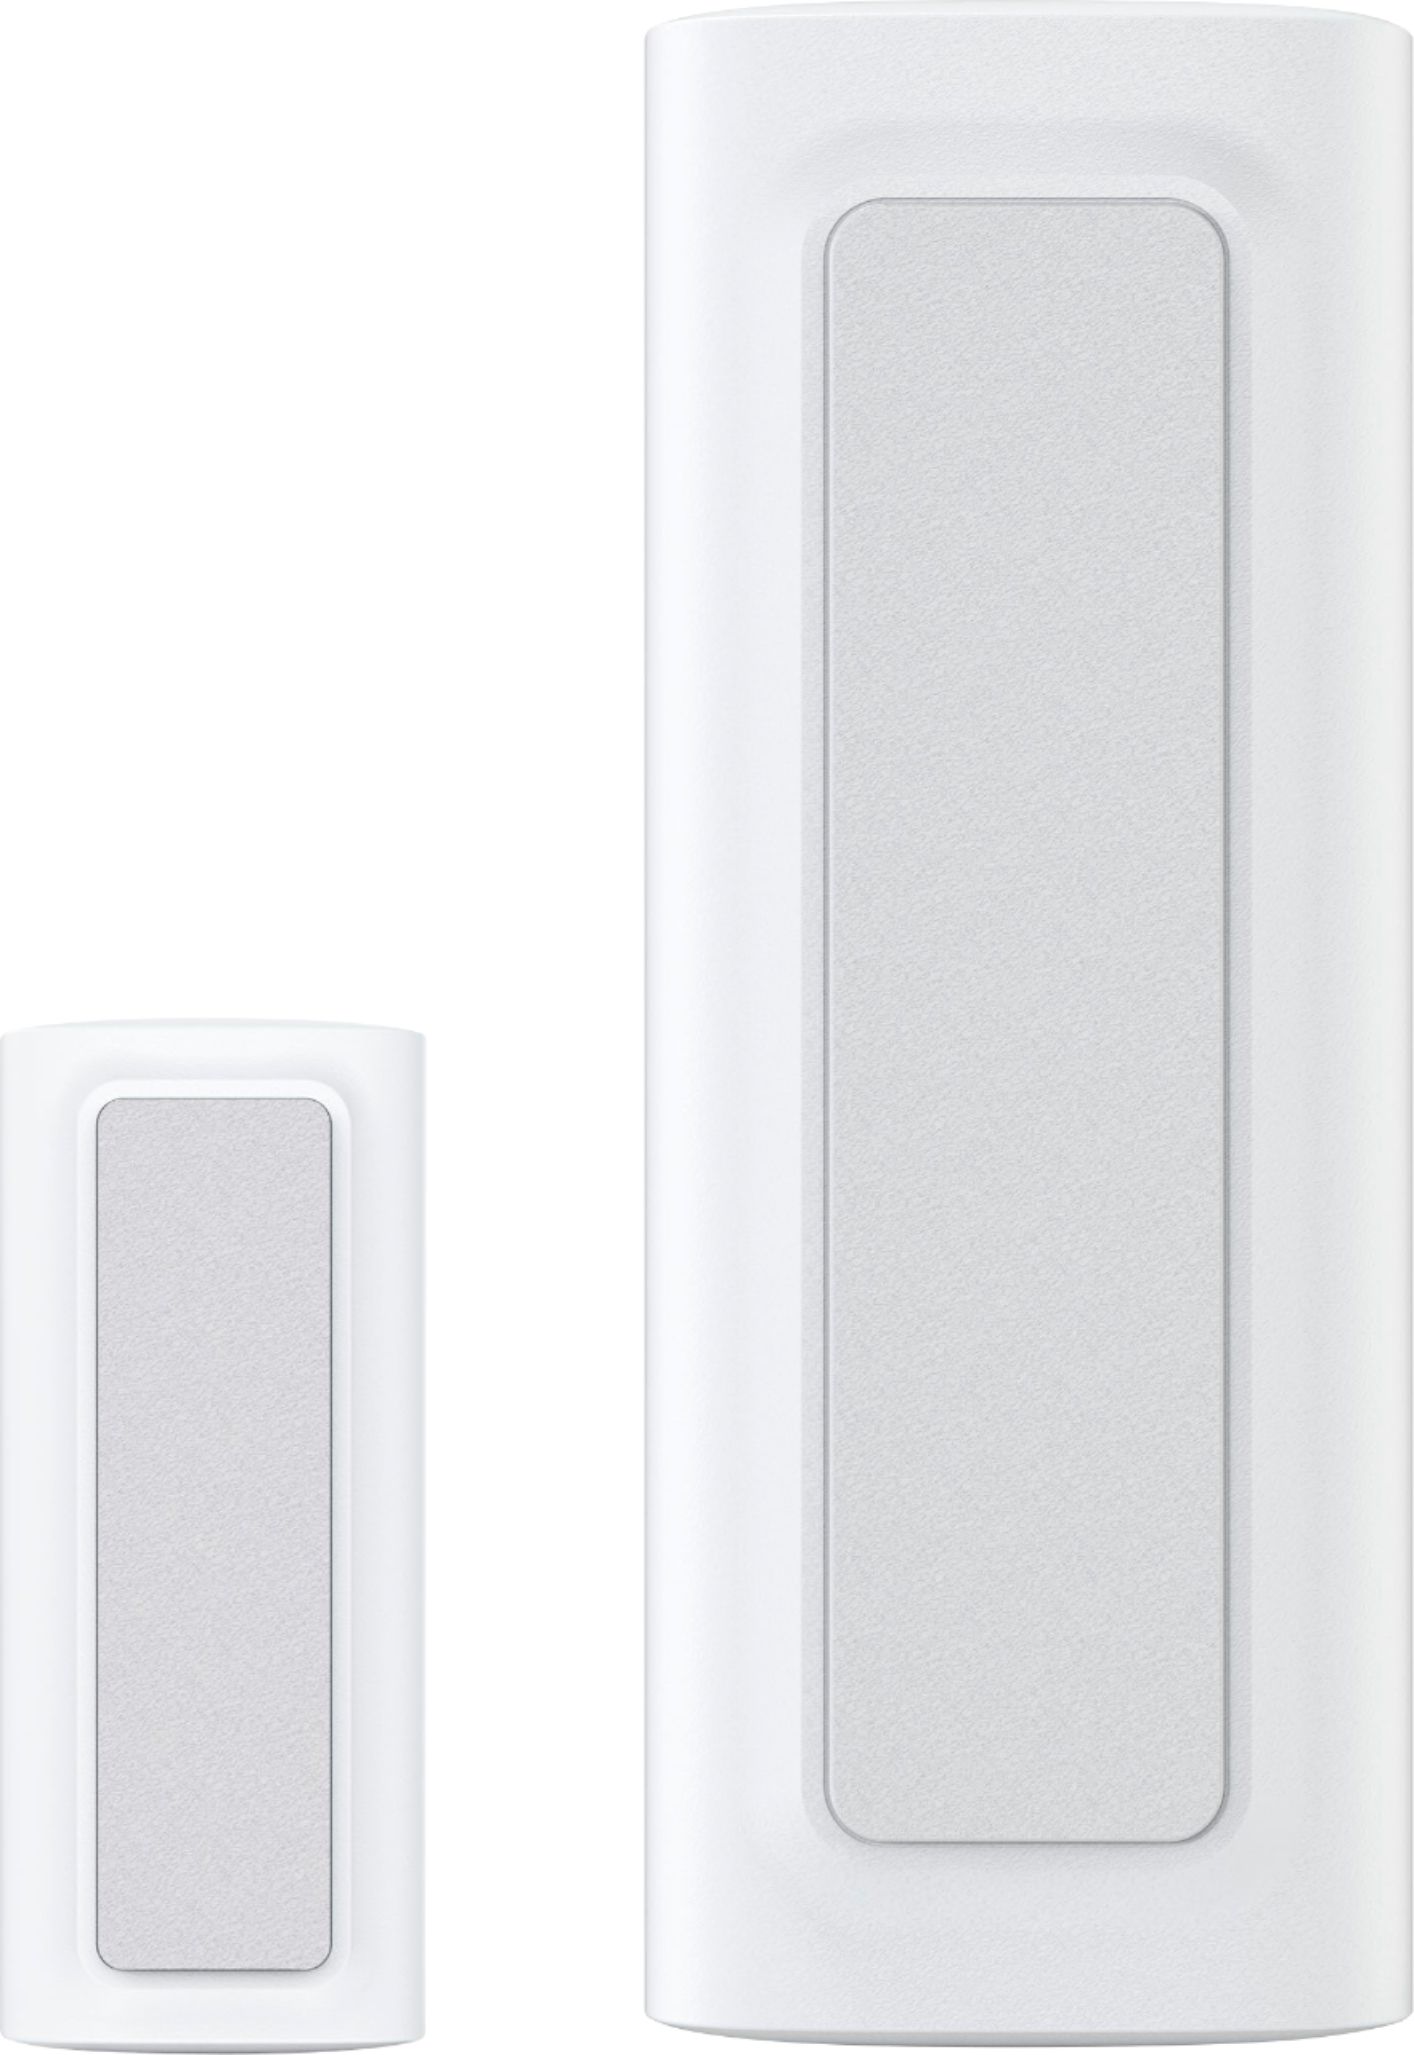 Angle View: Eve Door & Window Smart contact sensor with Apple HomeKit, Bluetooth and Thread - White